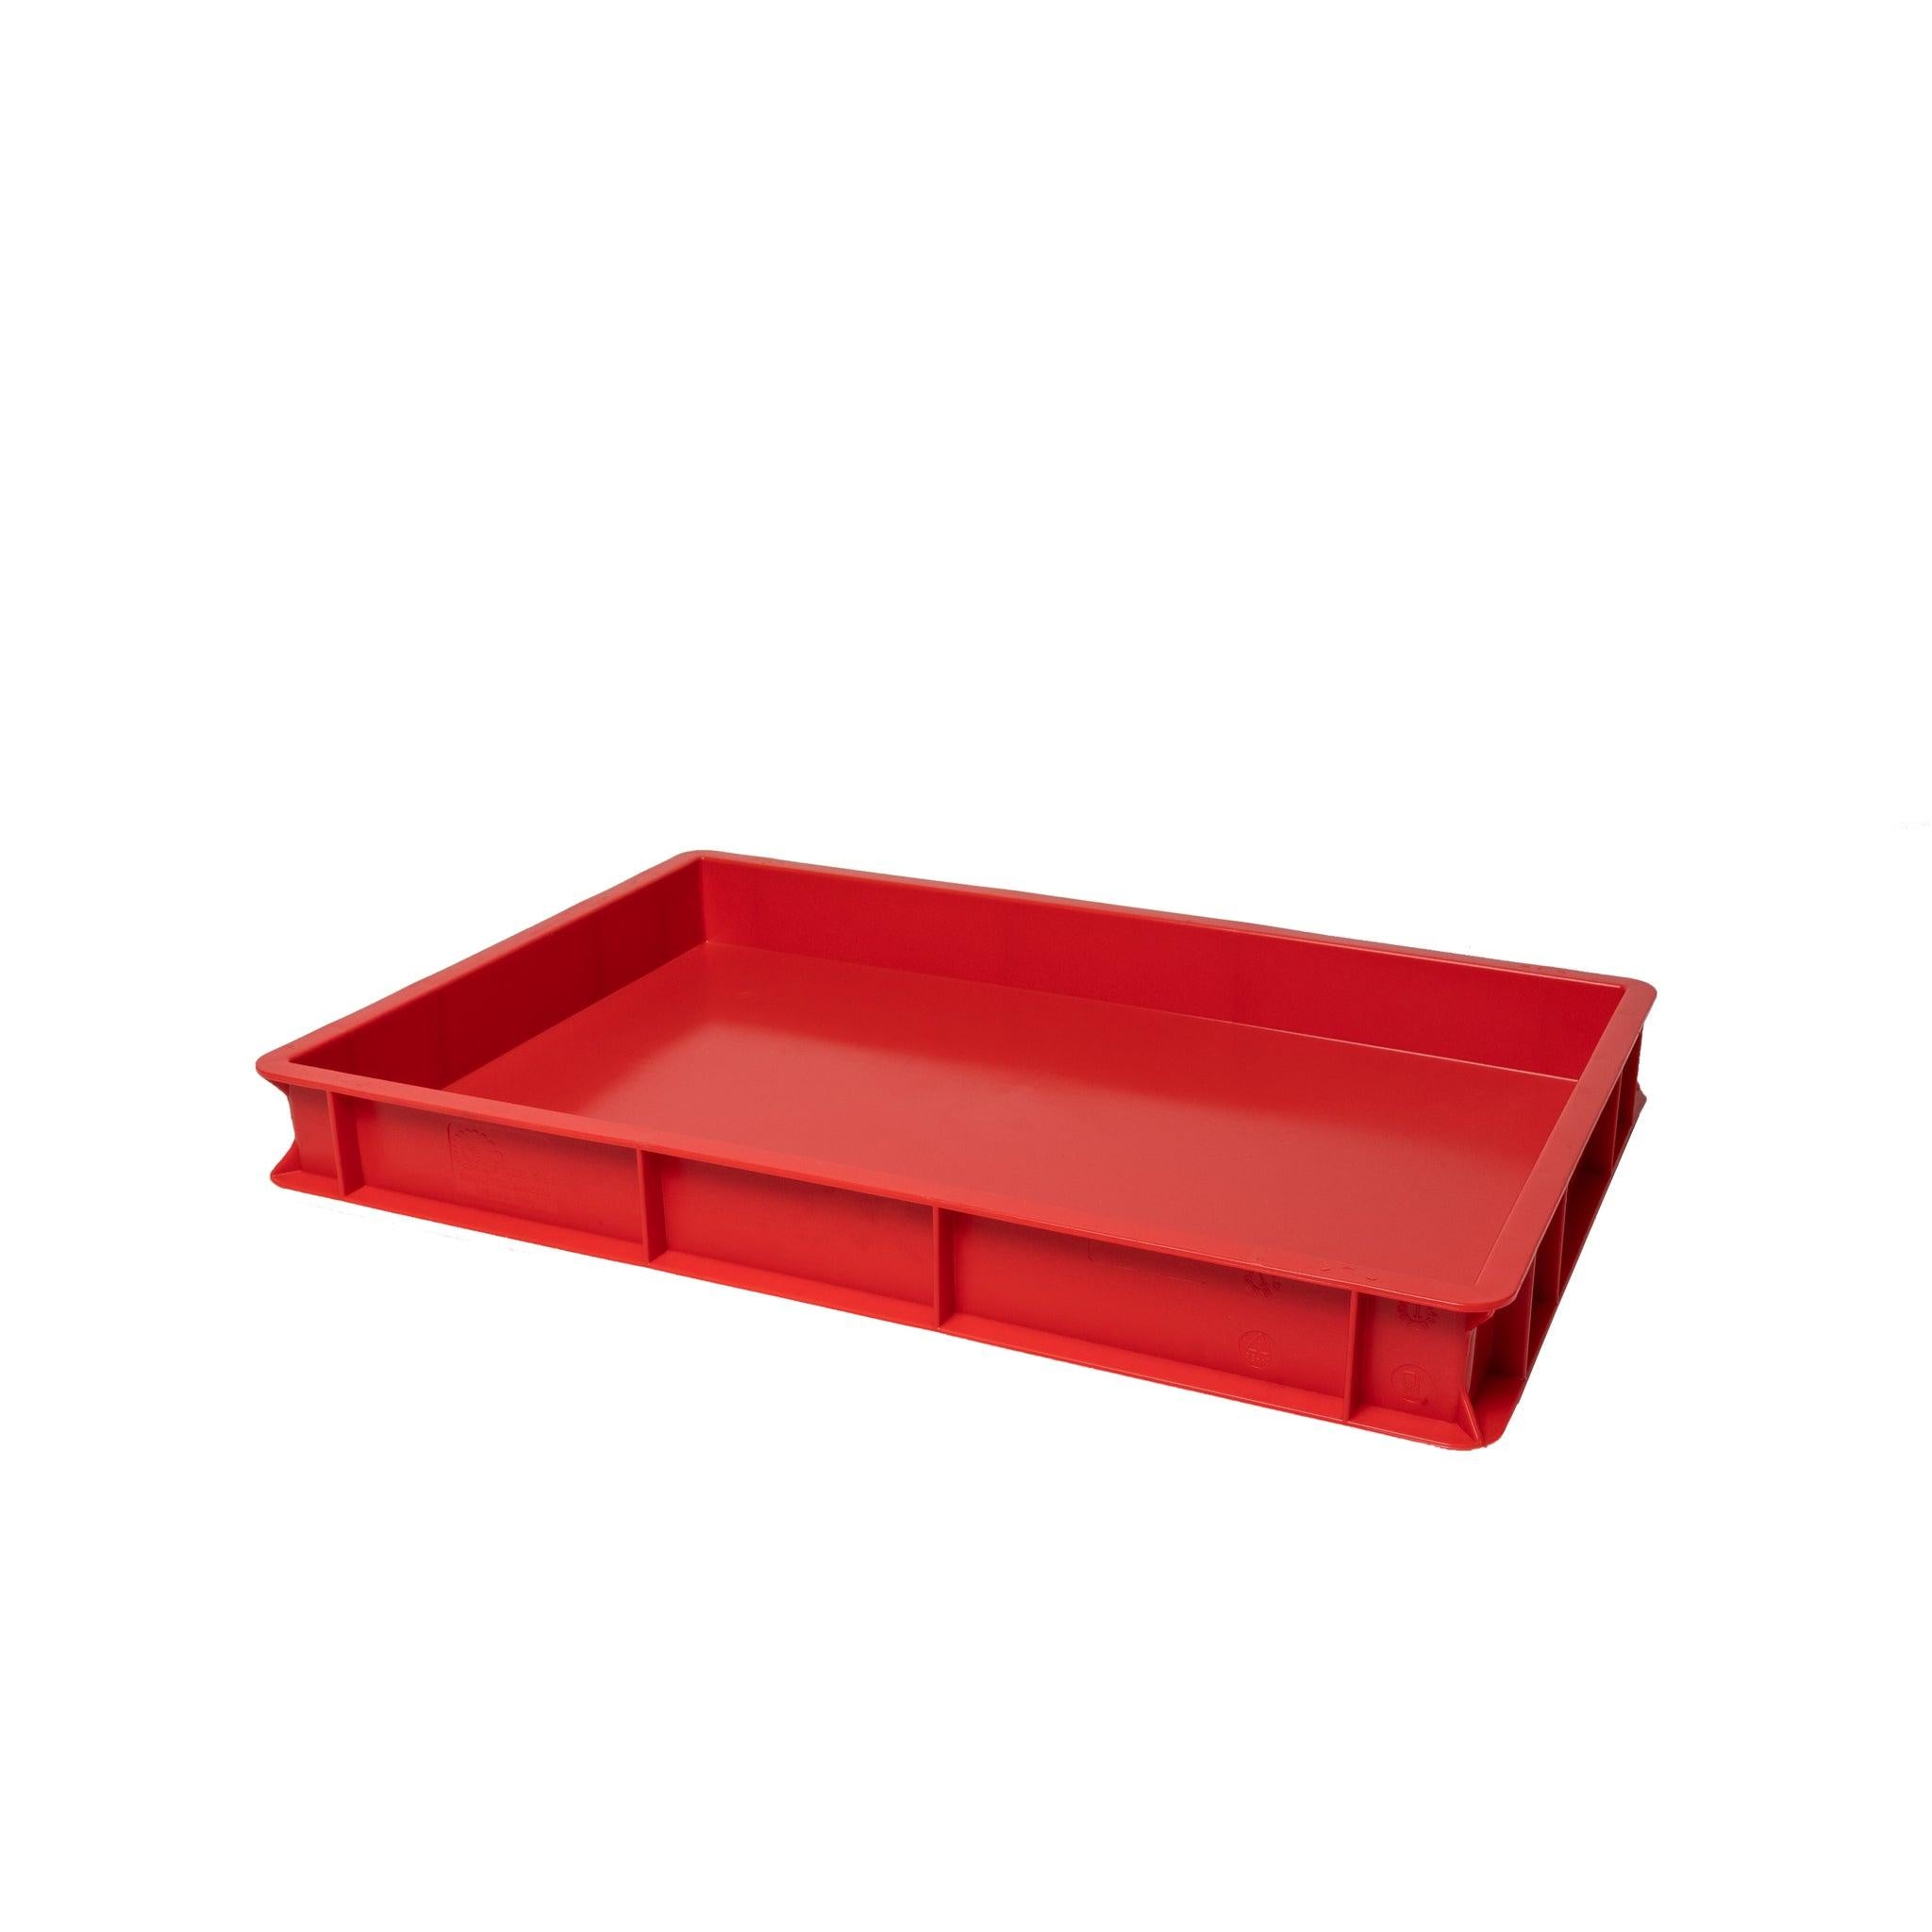 VAS007R - Pizza dough box Red H 2-3/4" - AMPTO